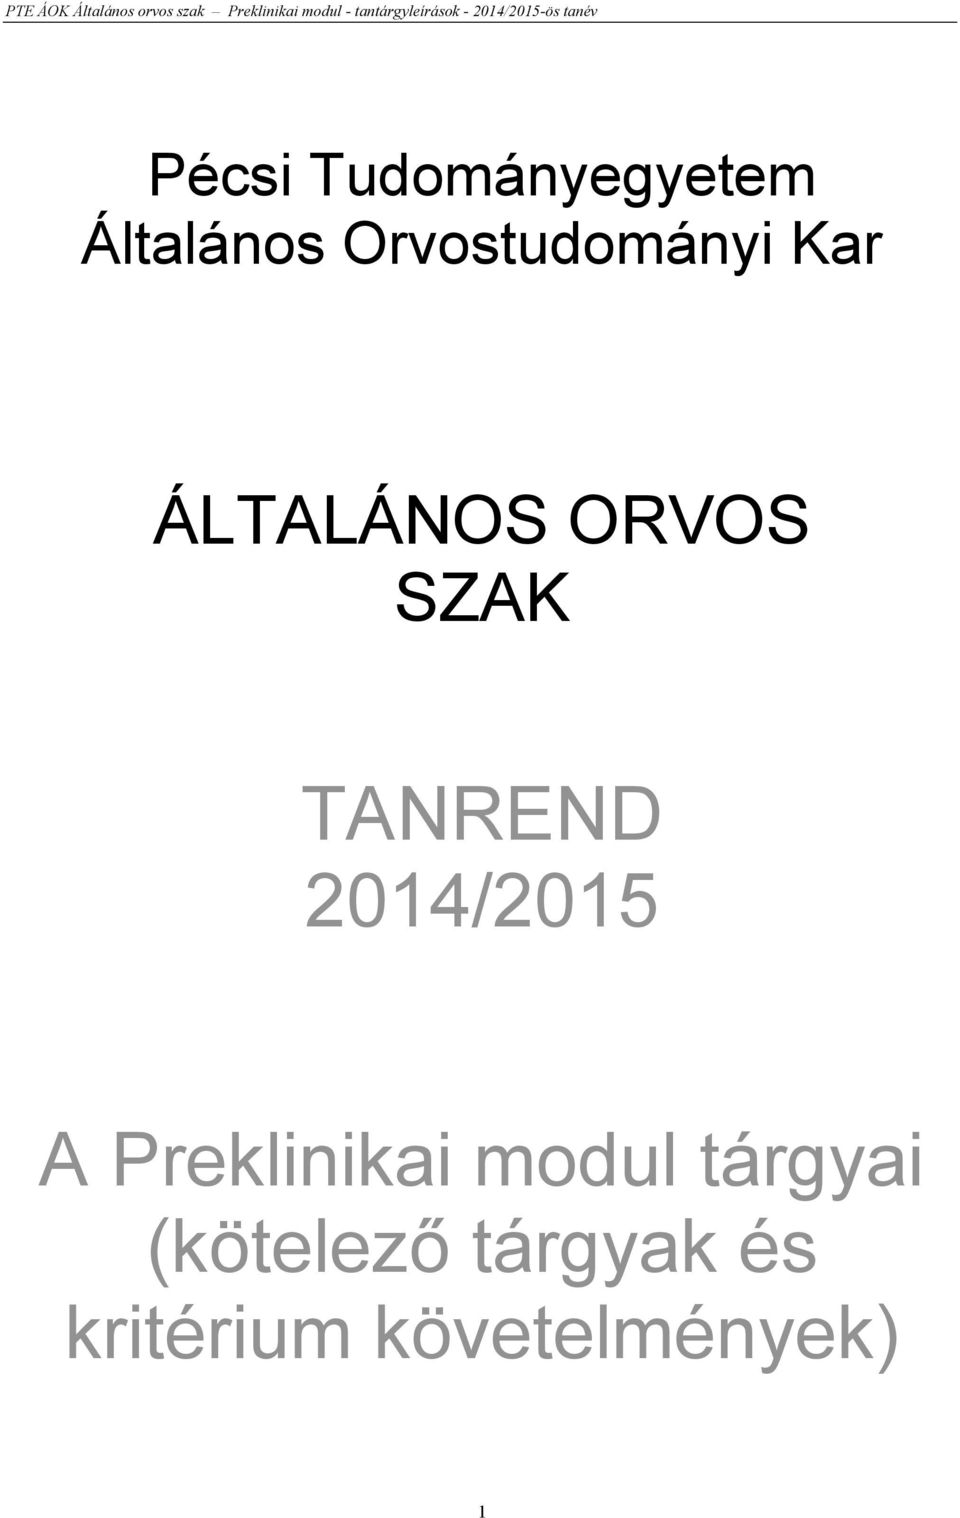 TANREND 2014/2015 A Preklinikai modul